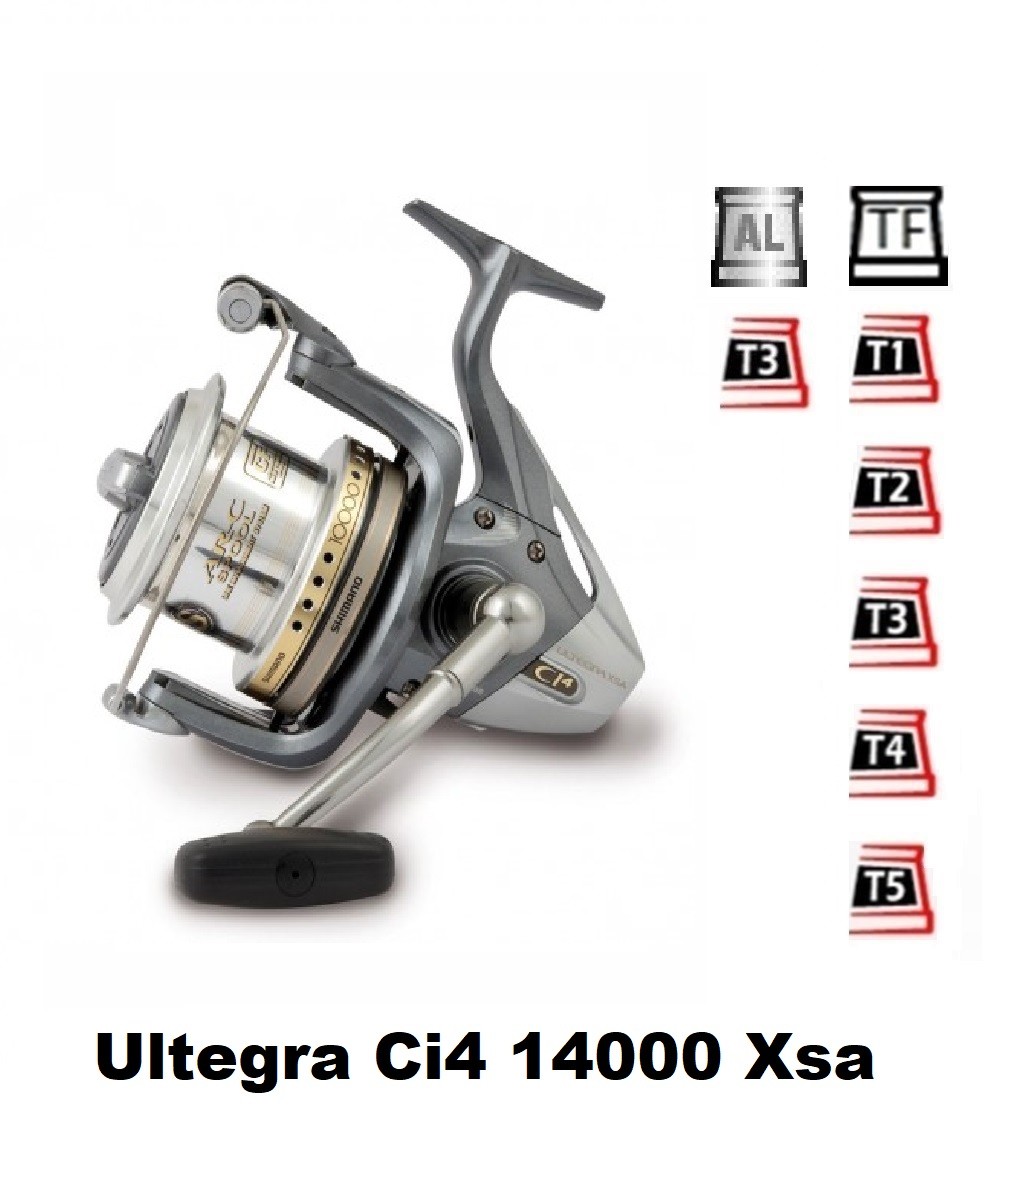 Ersatzpule kompatible mit shimano Ultegra Ci4 14000 Xsa